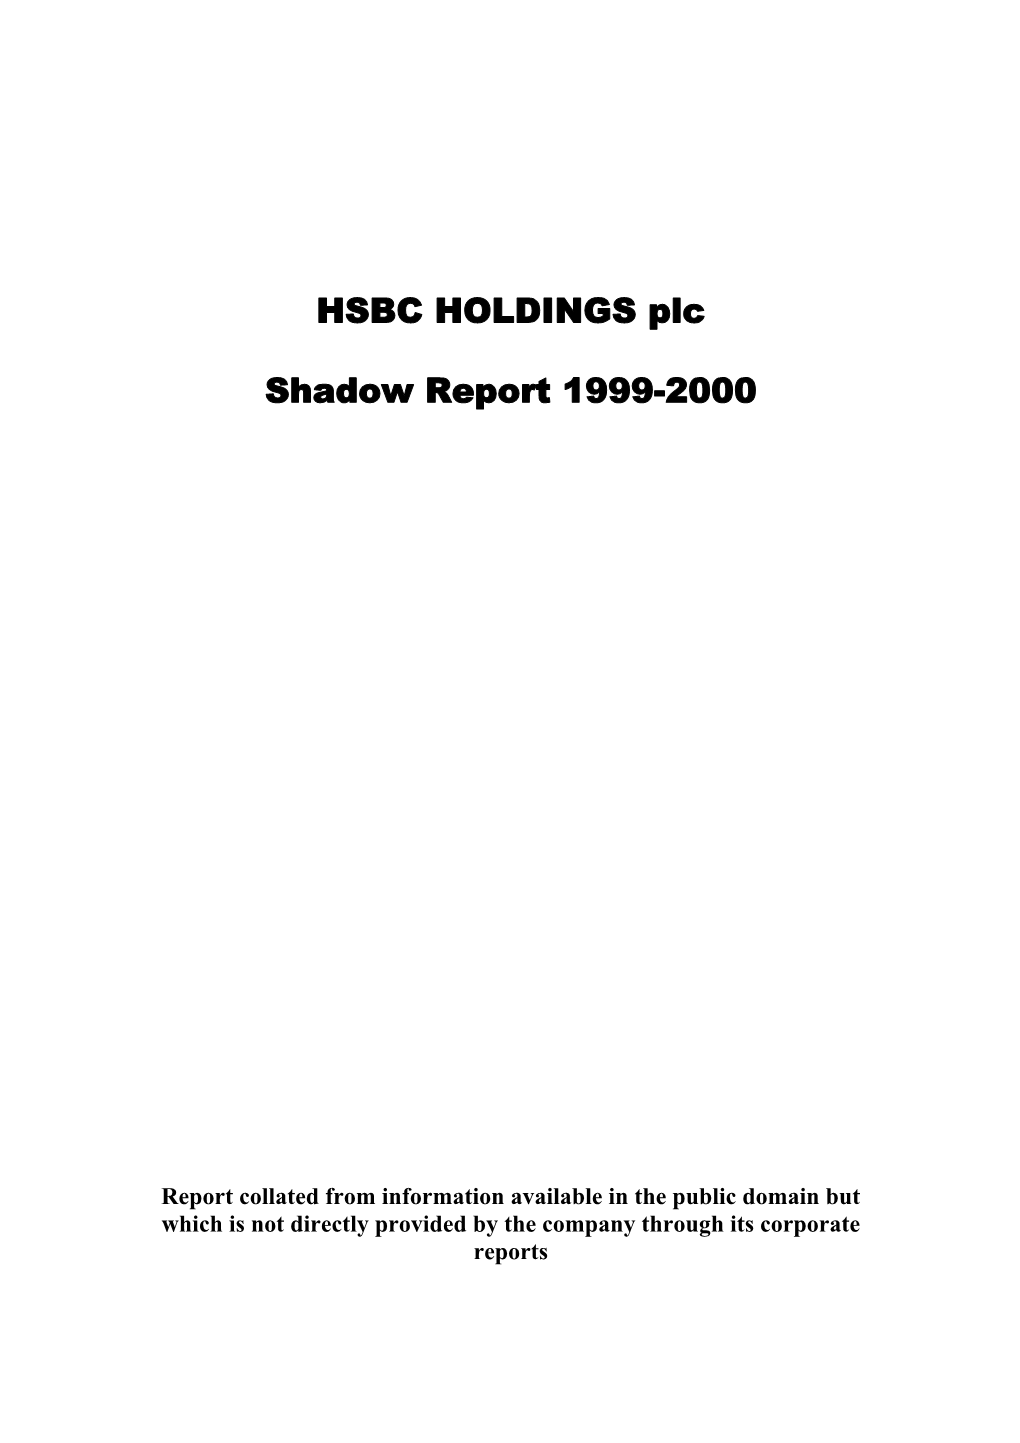 HSBC HOLDINGS Plc Shadow Report 1999-2000